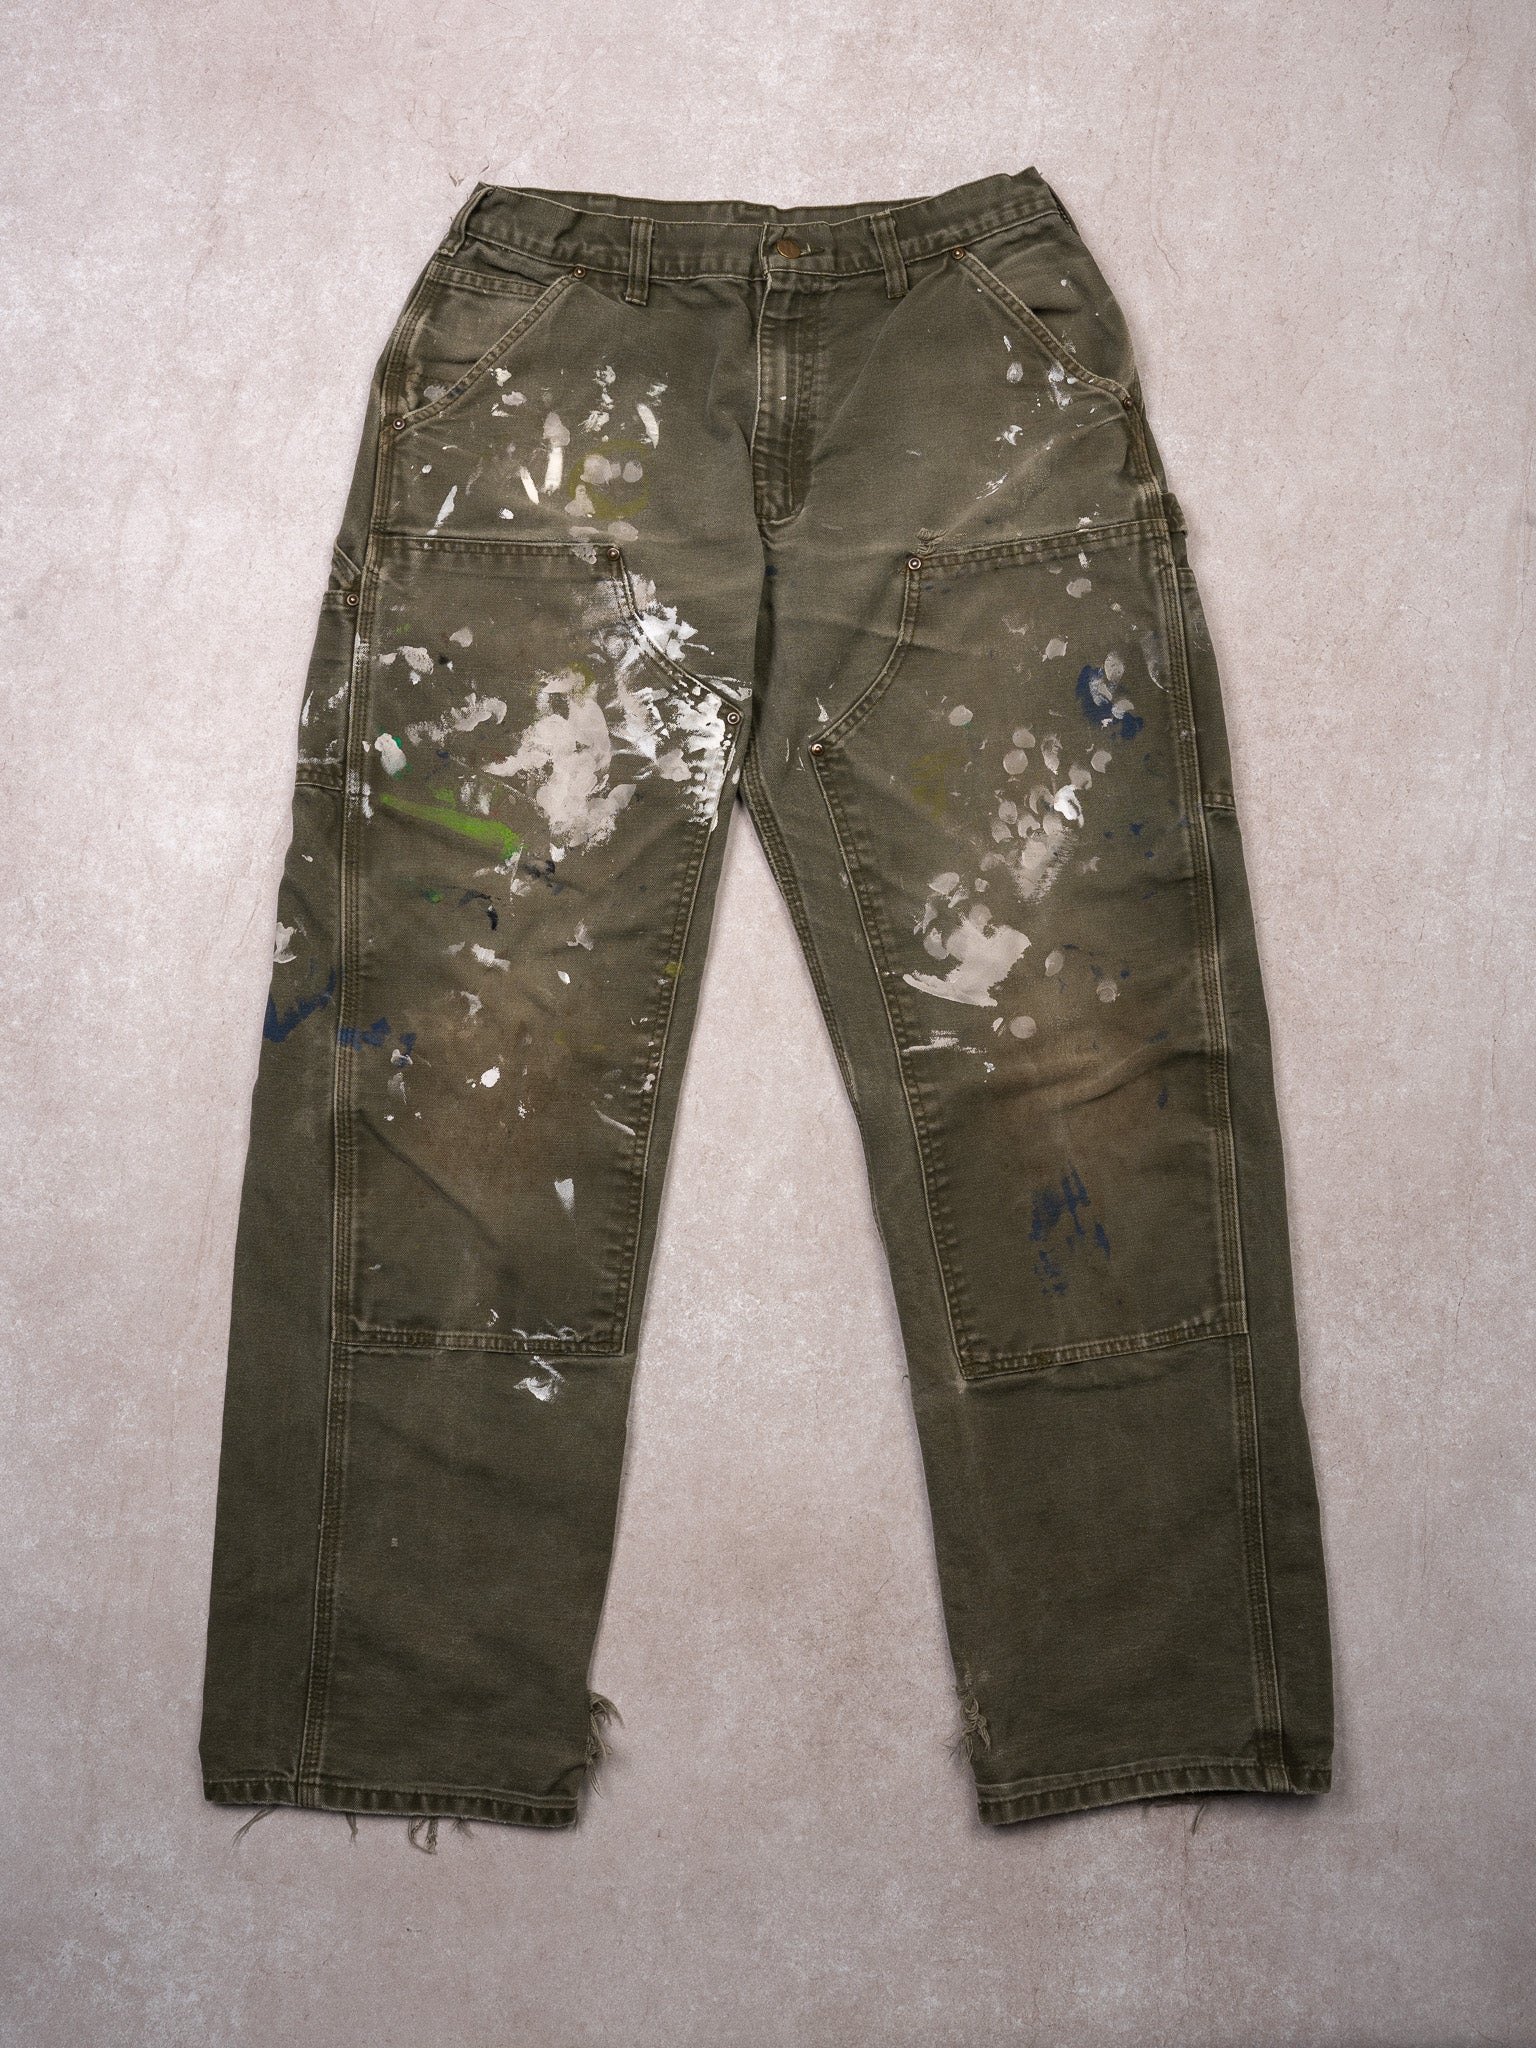 Vintage Moss Green Carhartt Paint Splashed Double Knee Cargo Pants (33 x 32)